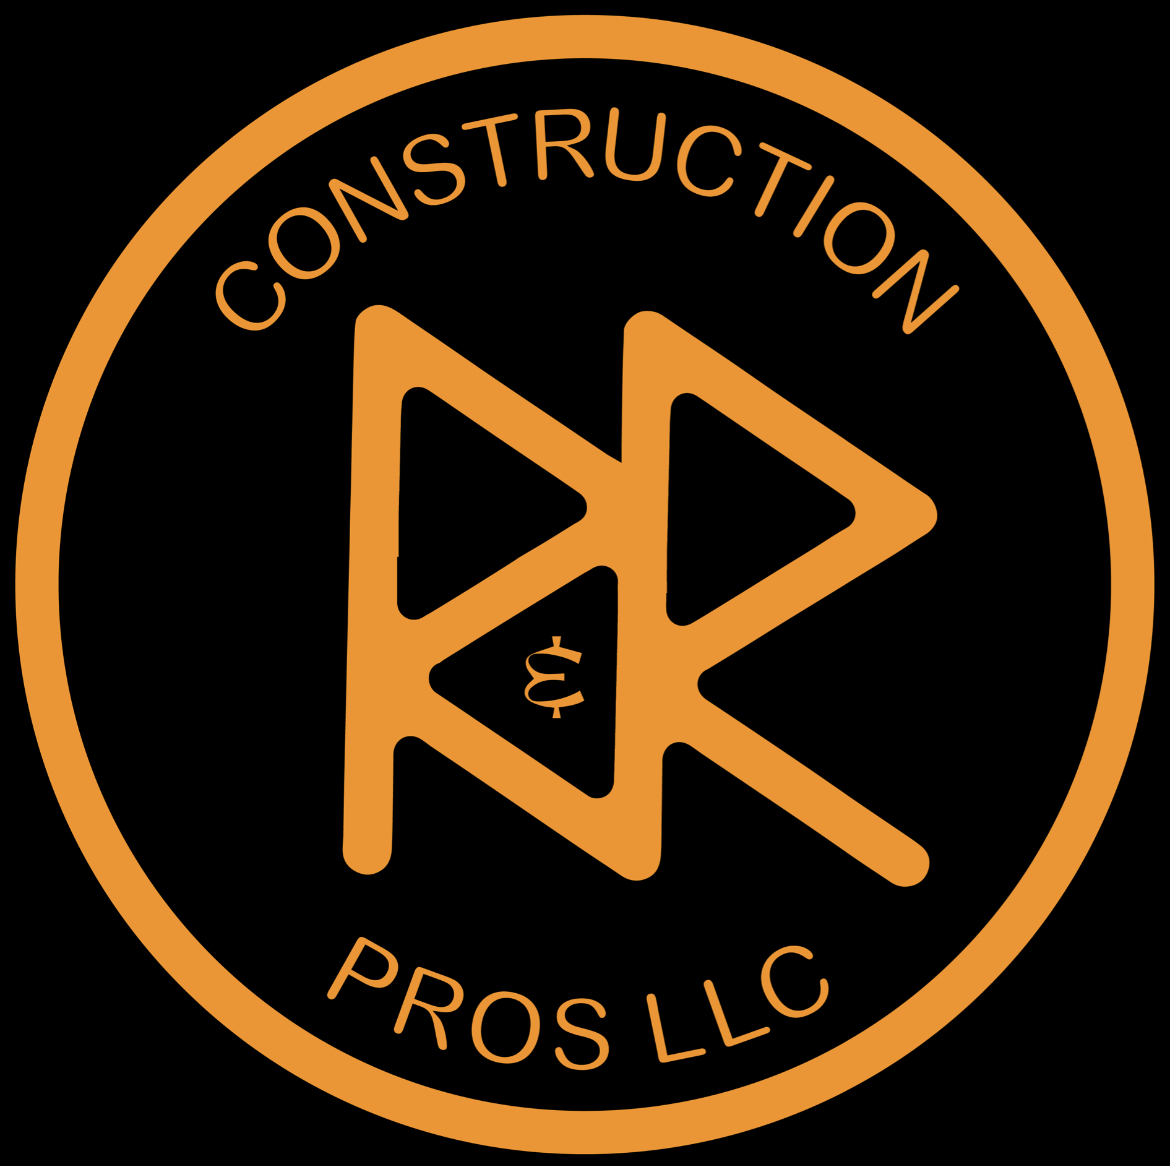 R&R Construction Pros LLC. 3665 Vermont Rd, Wellsville Kansas 66092